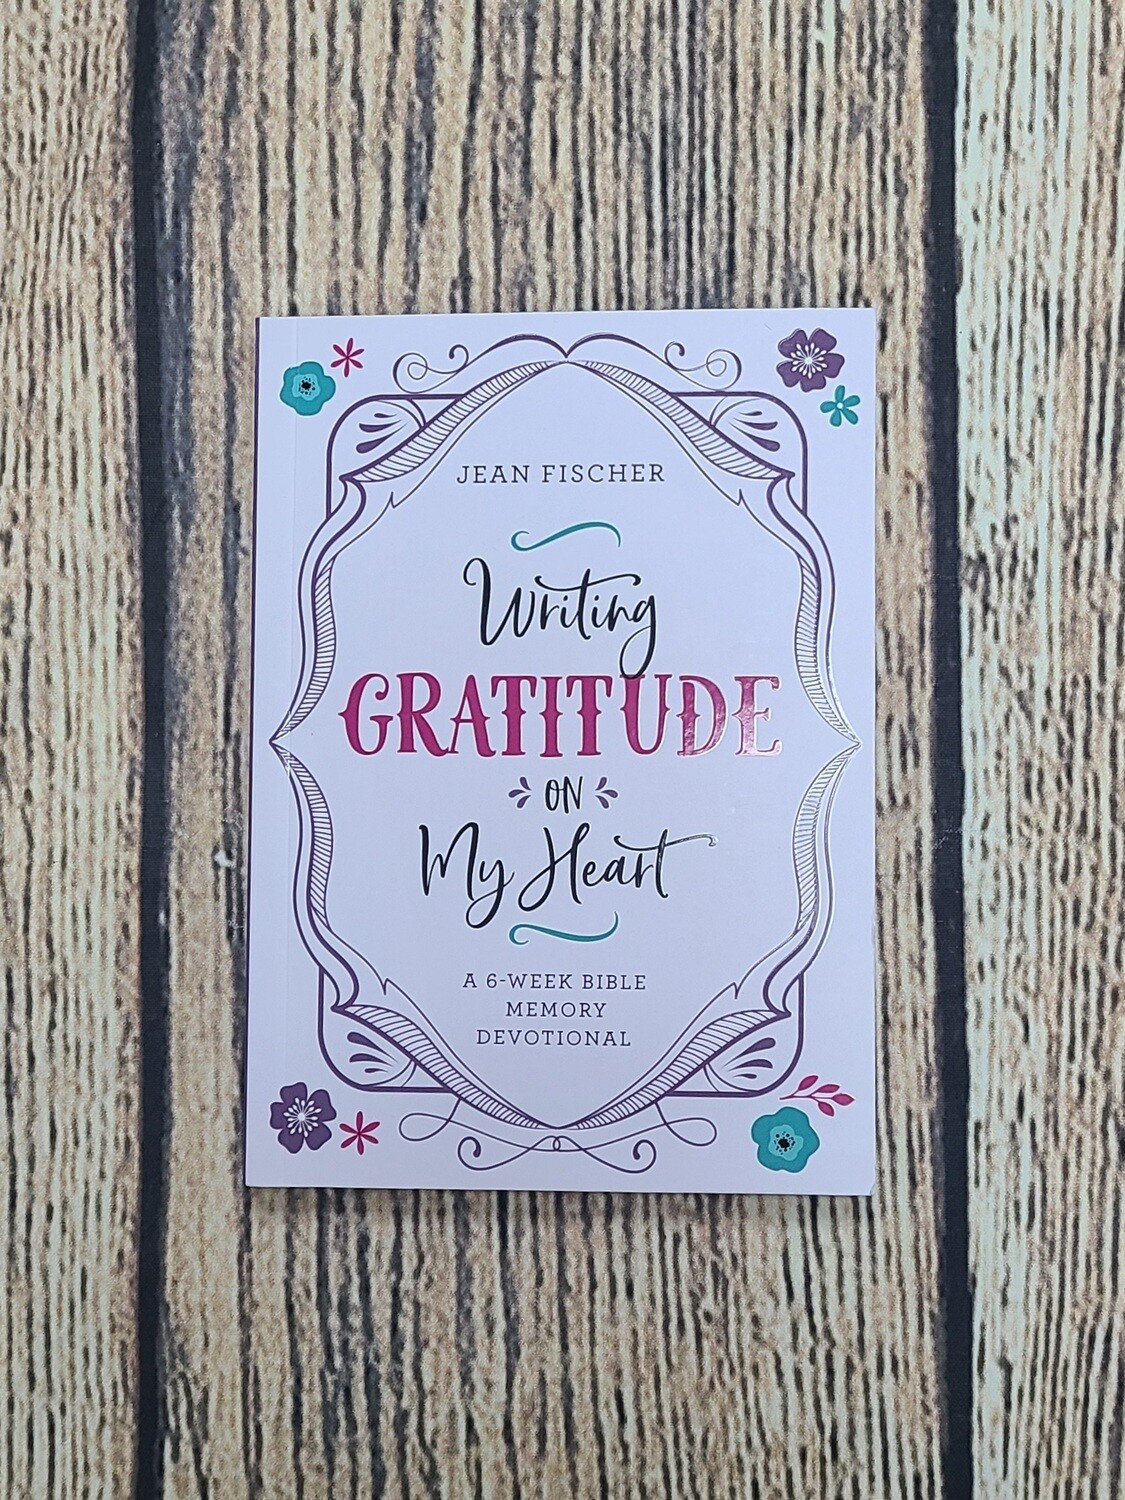 Writing Gratitude on my Heart: A 6-Week Bible Memory Devotional by Jean Fischer - Paperback - New